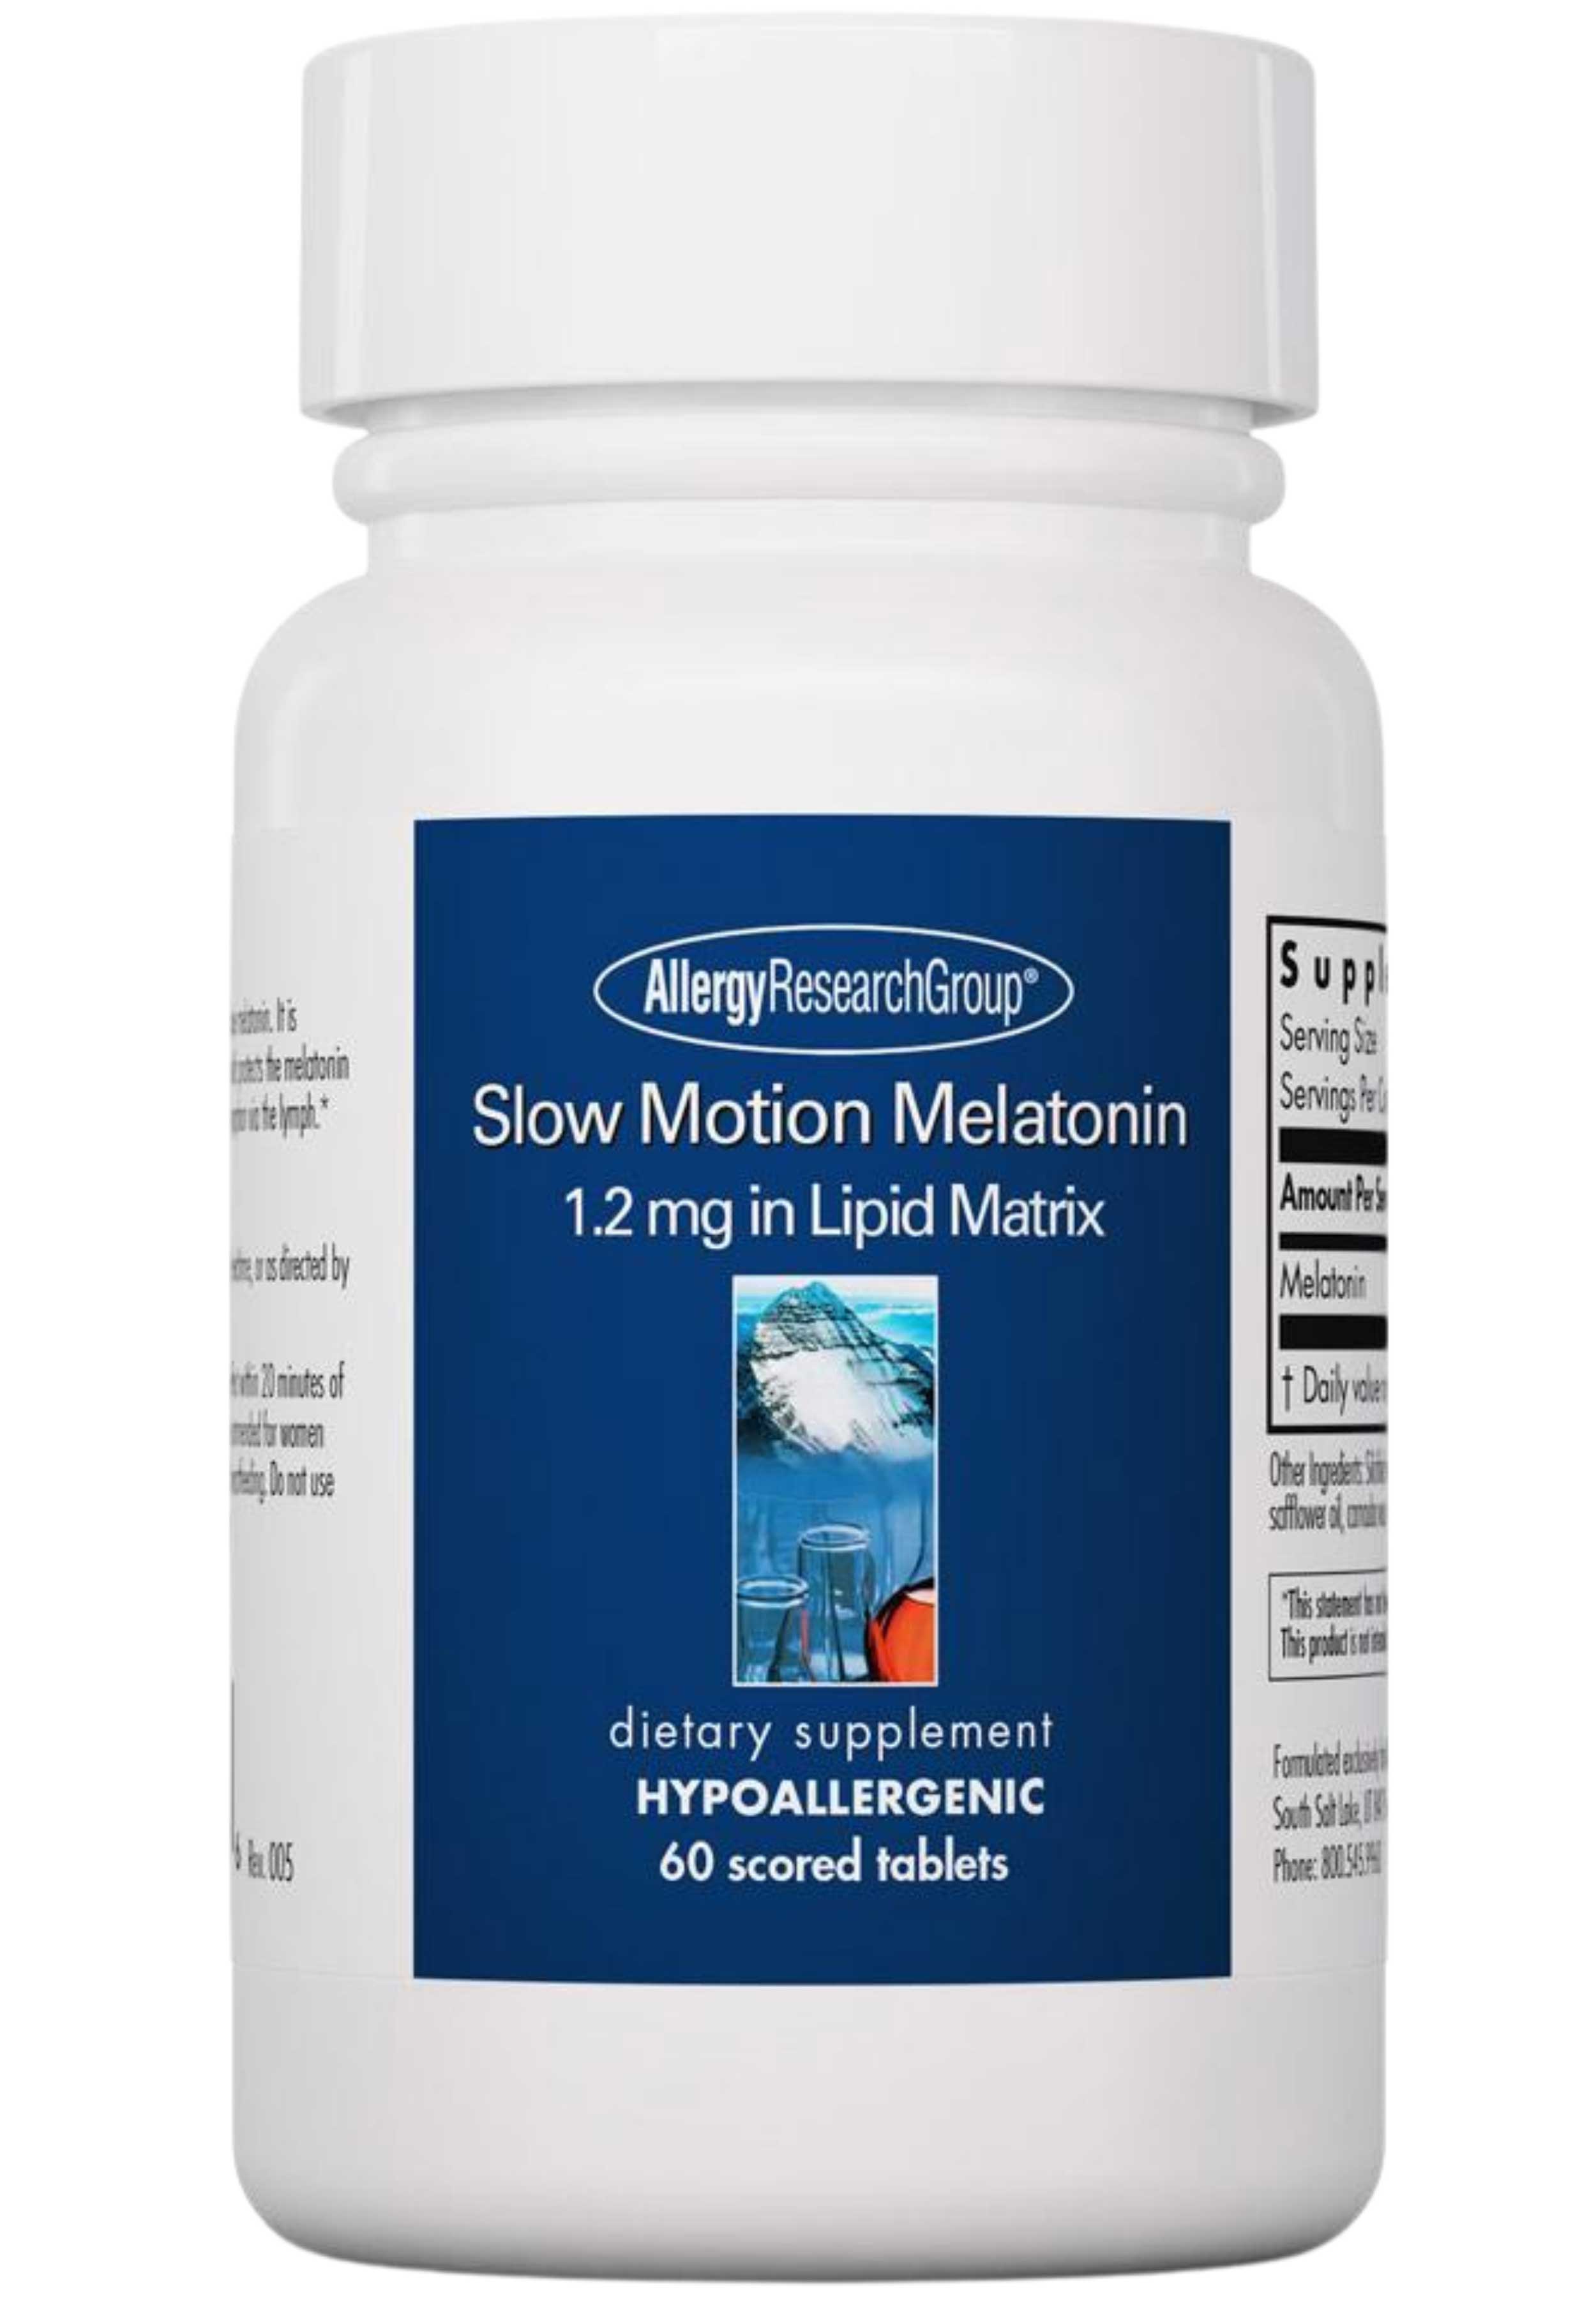 Allergy Research Group Slow Motion Melatonin